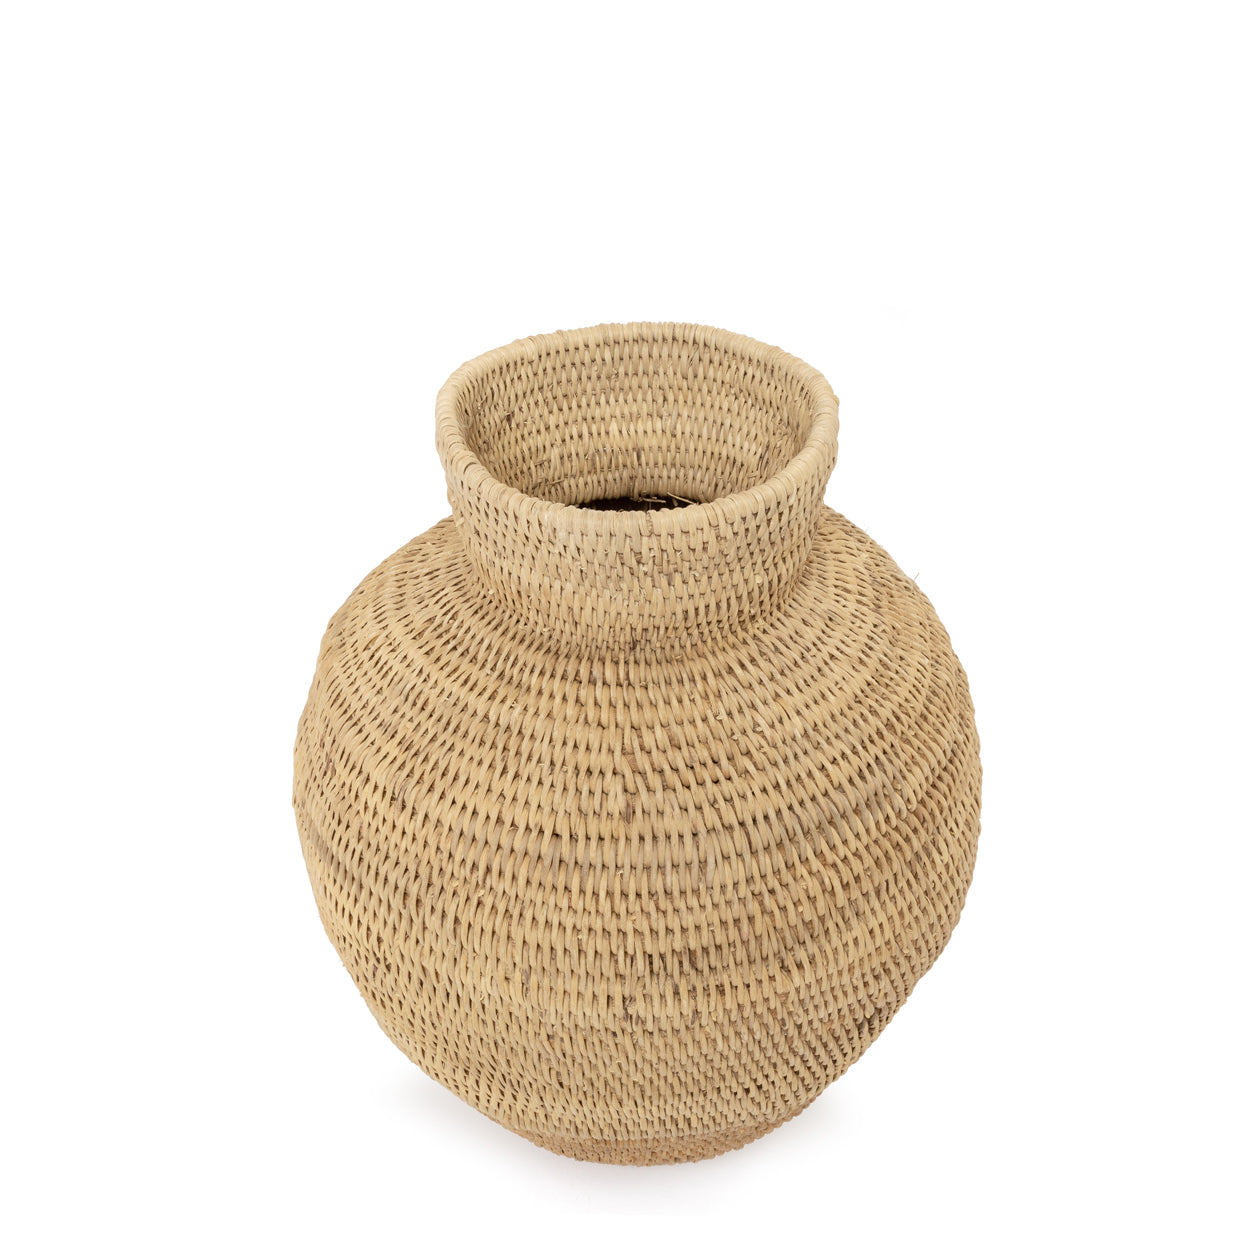 Buhera basket natural 50 cm